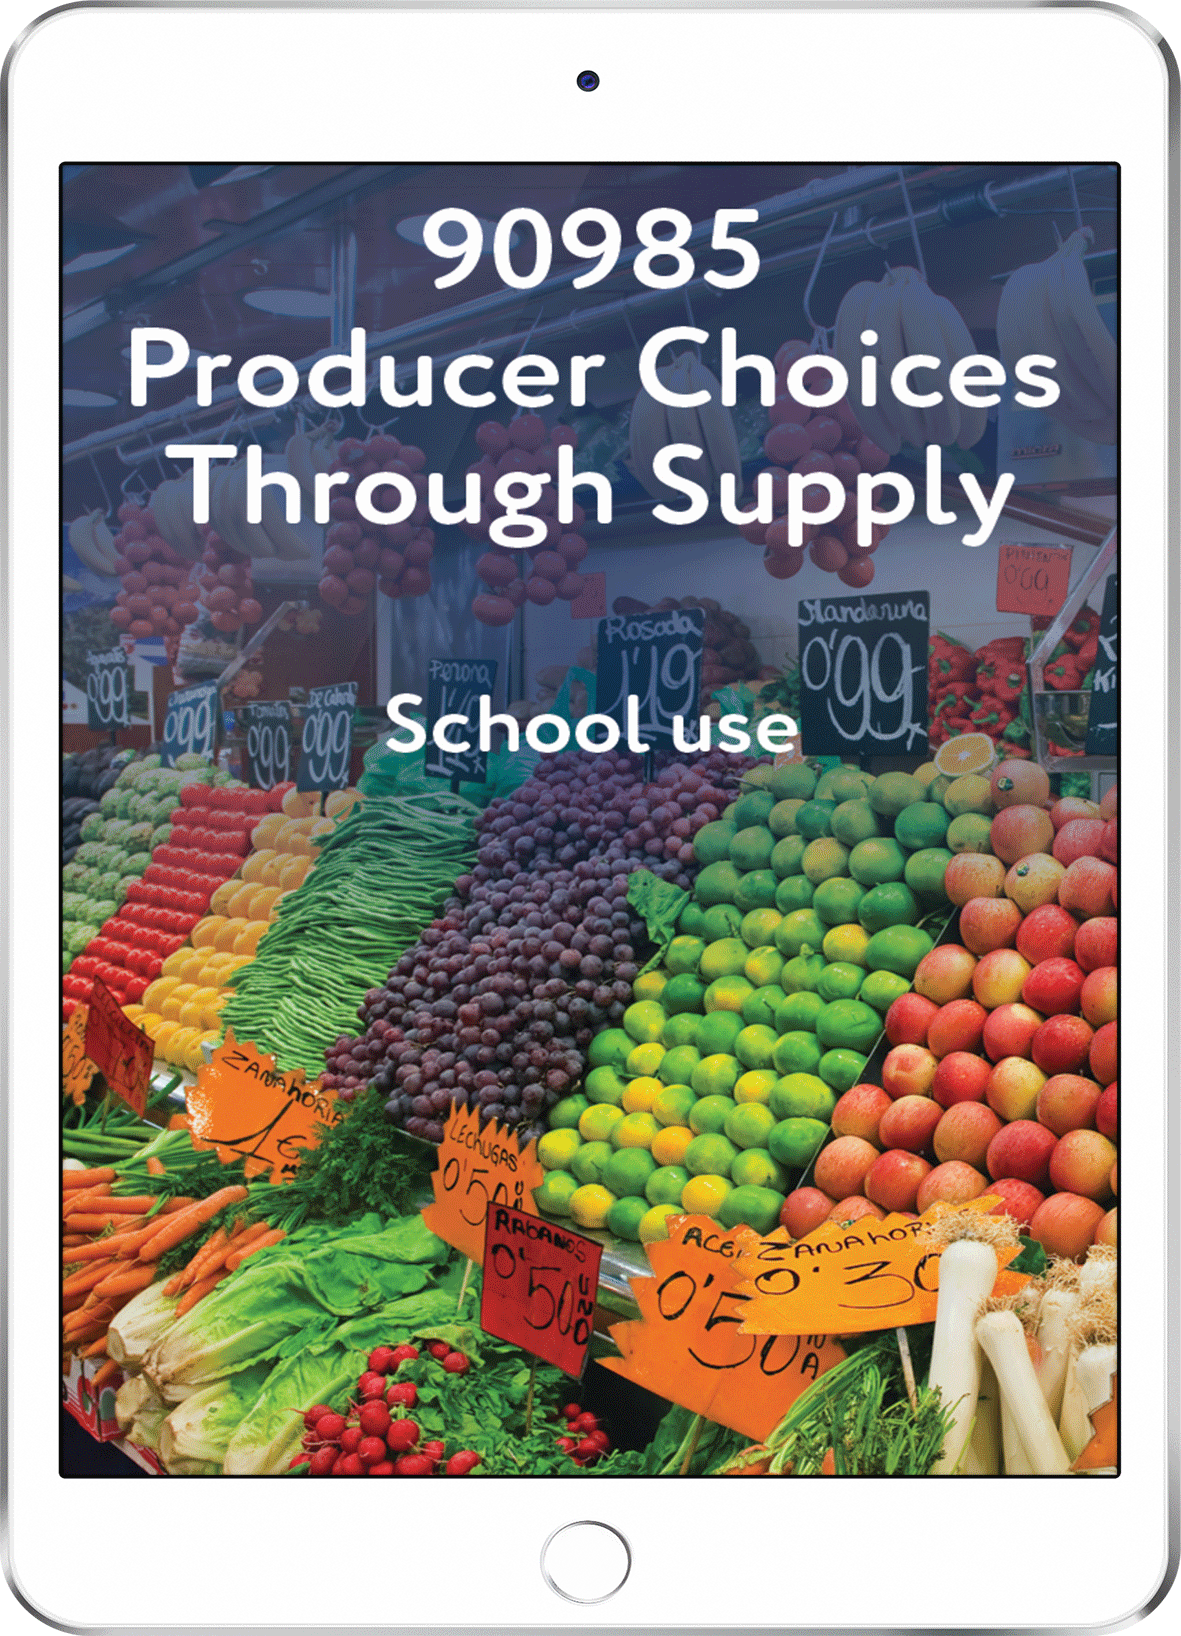 90985 Producer Choices Through Supply - School Use